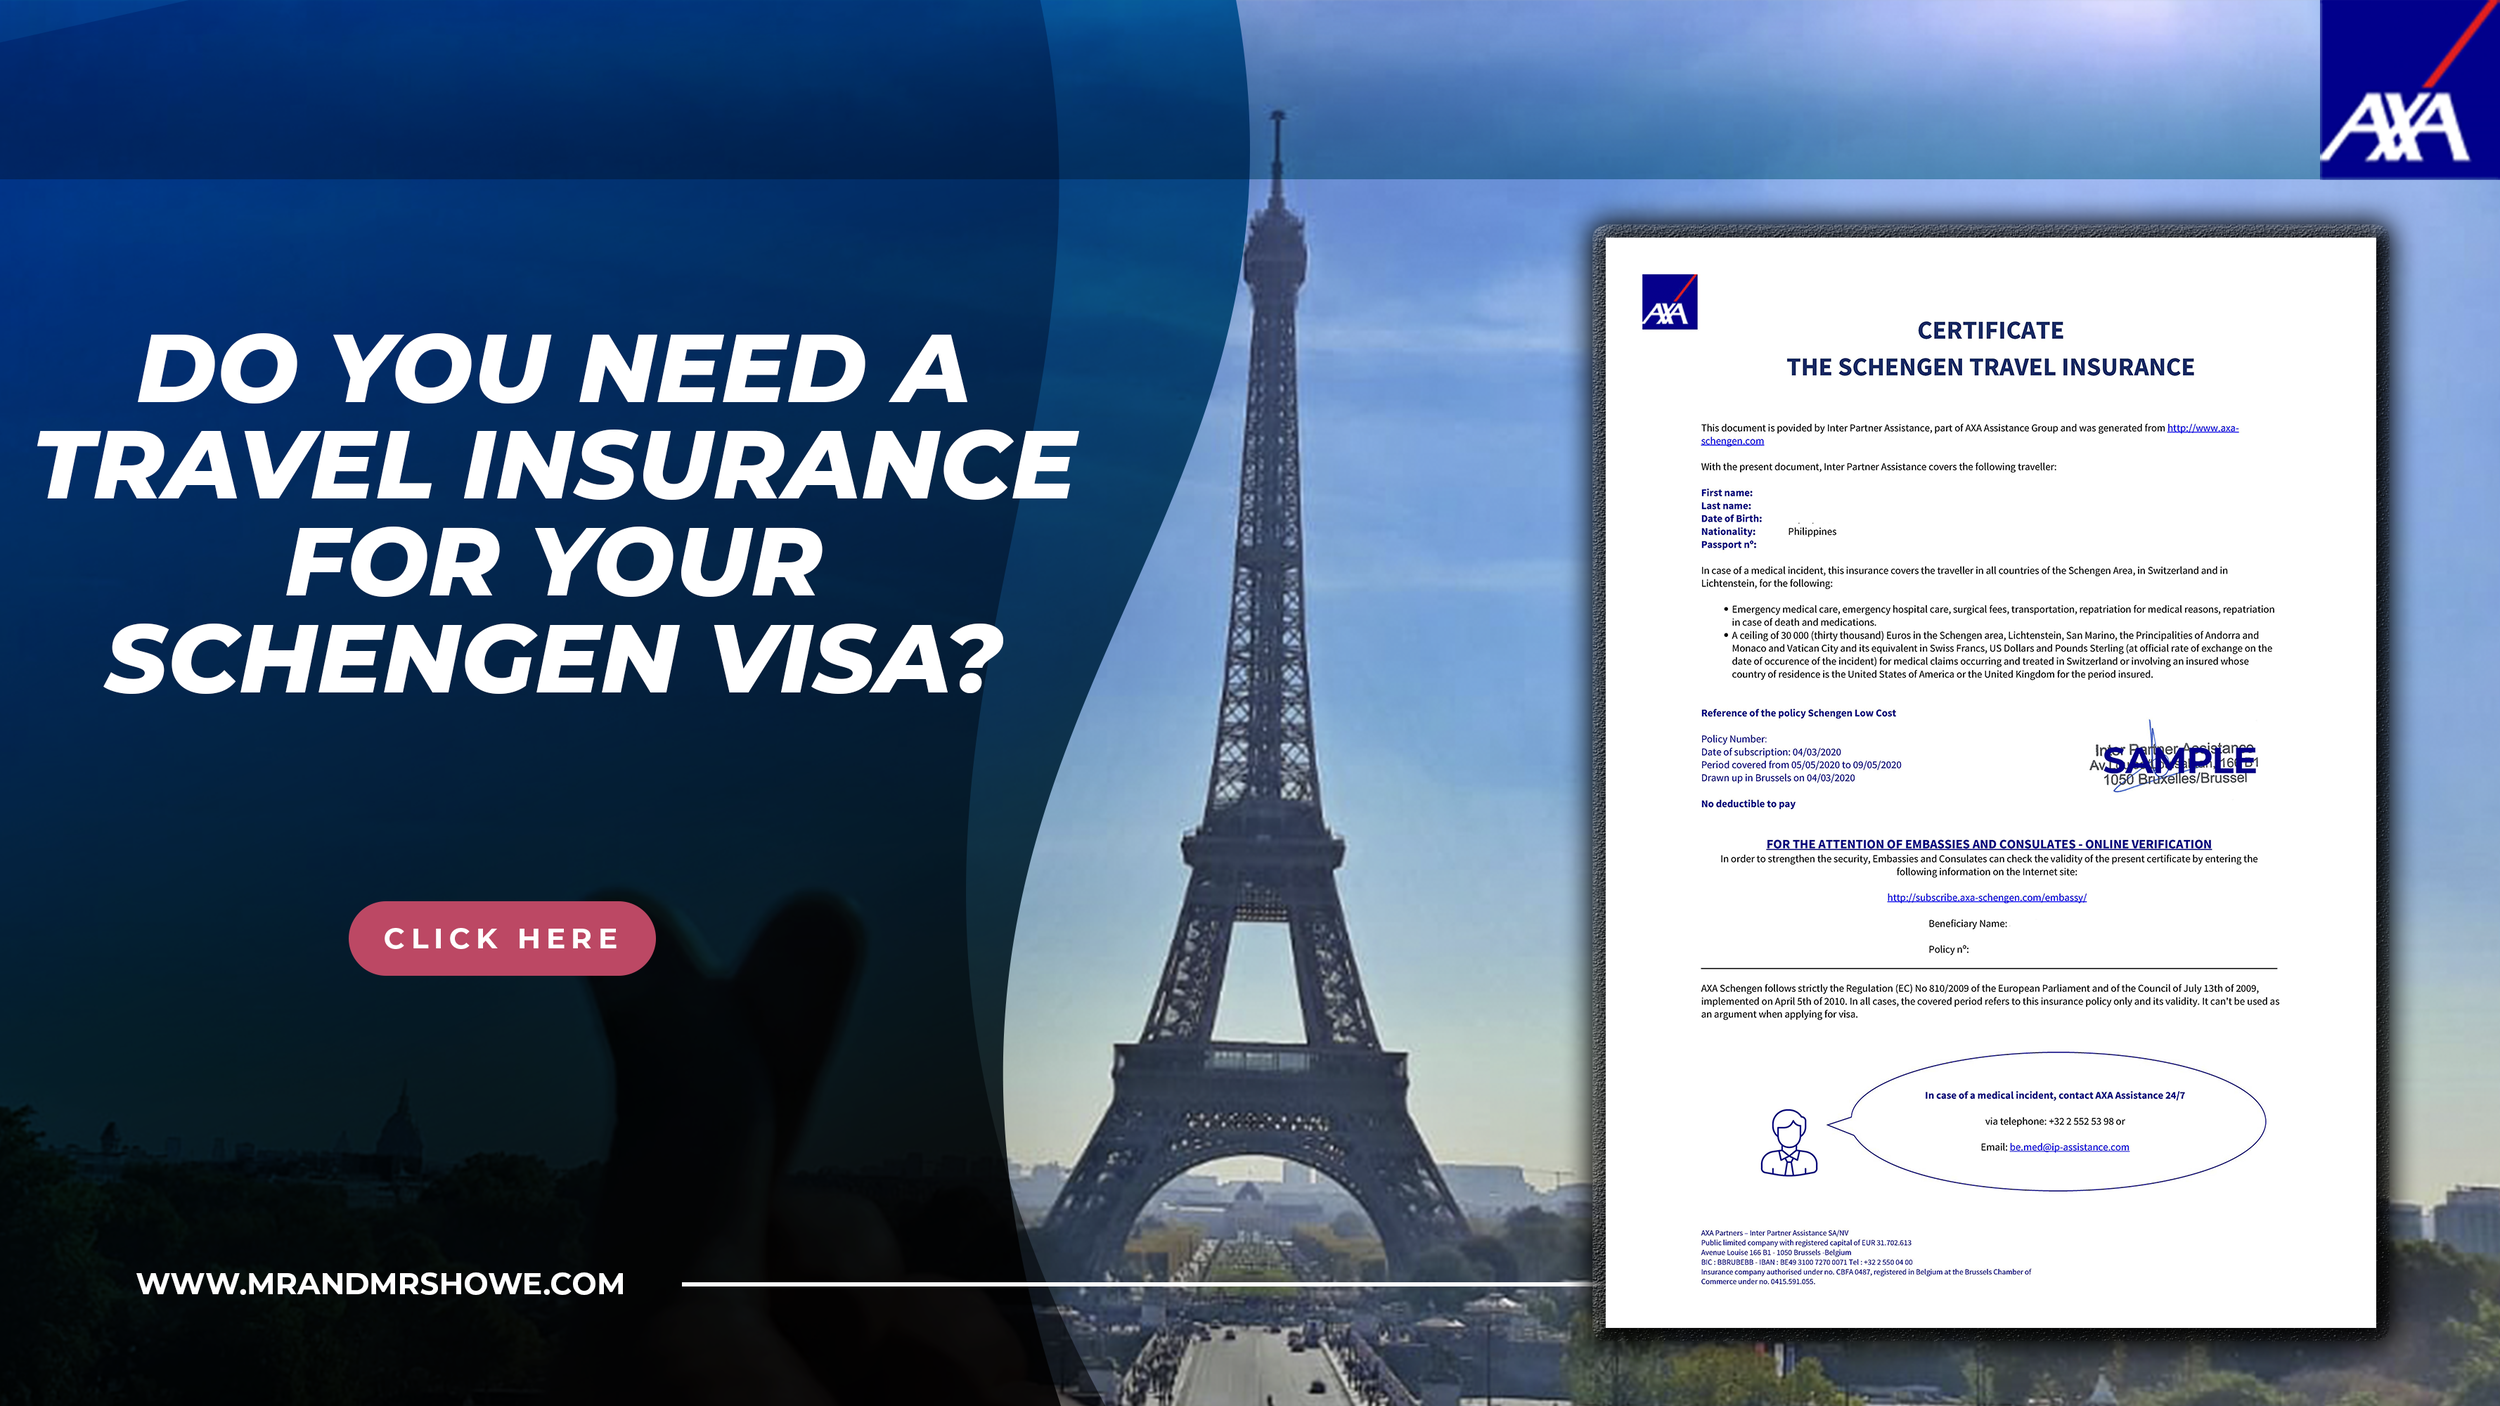 axa travel insurance contact number